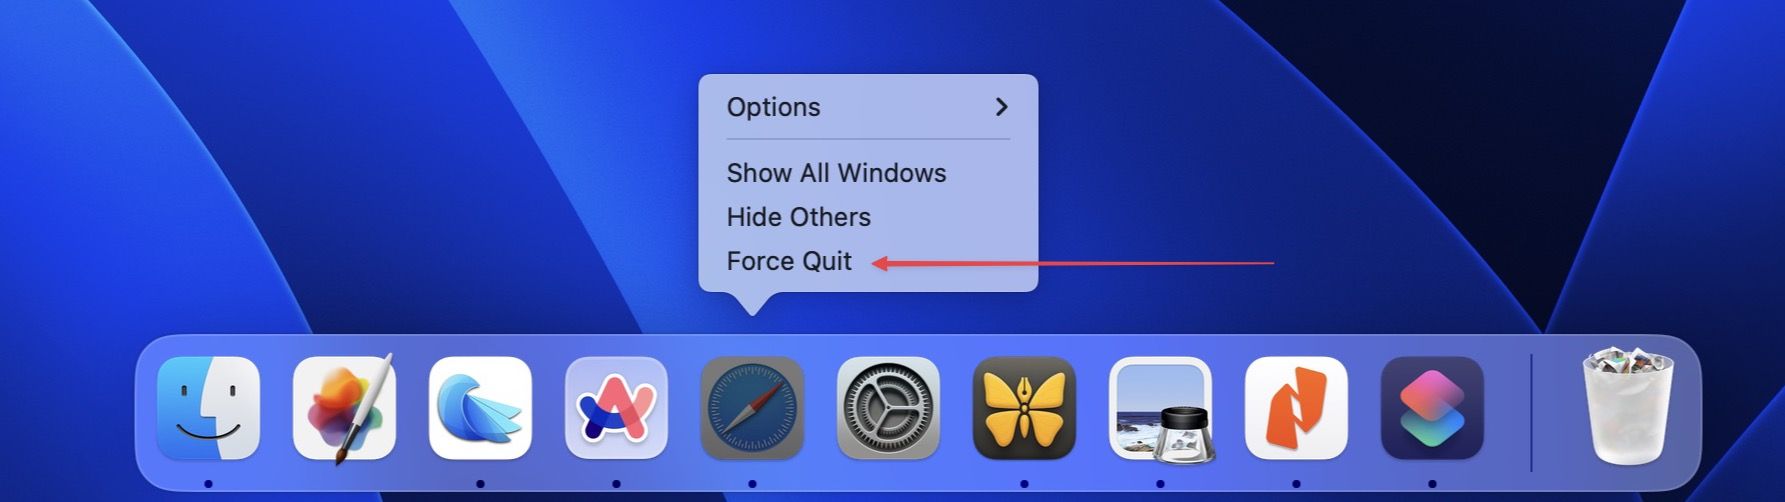 force quit using dock screenshot